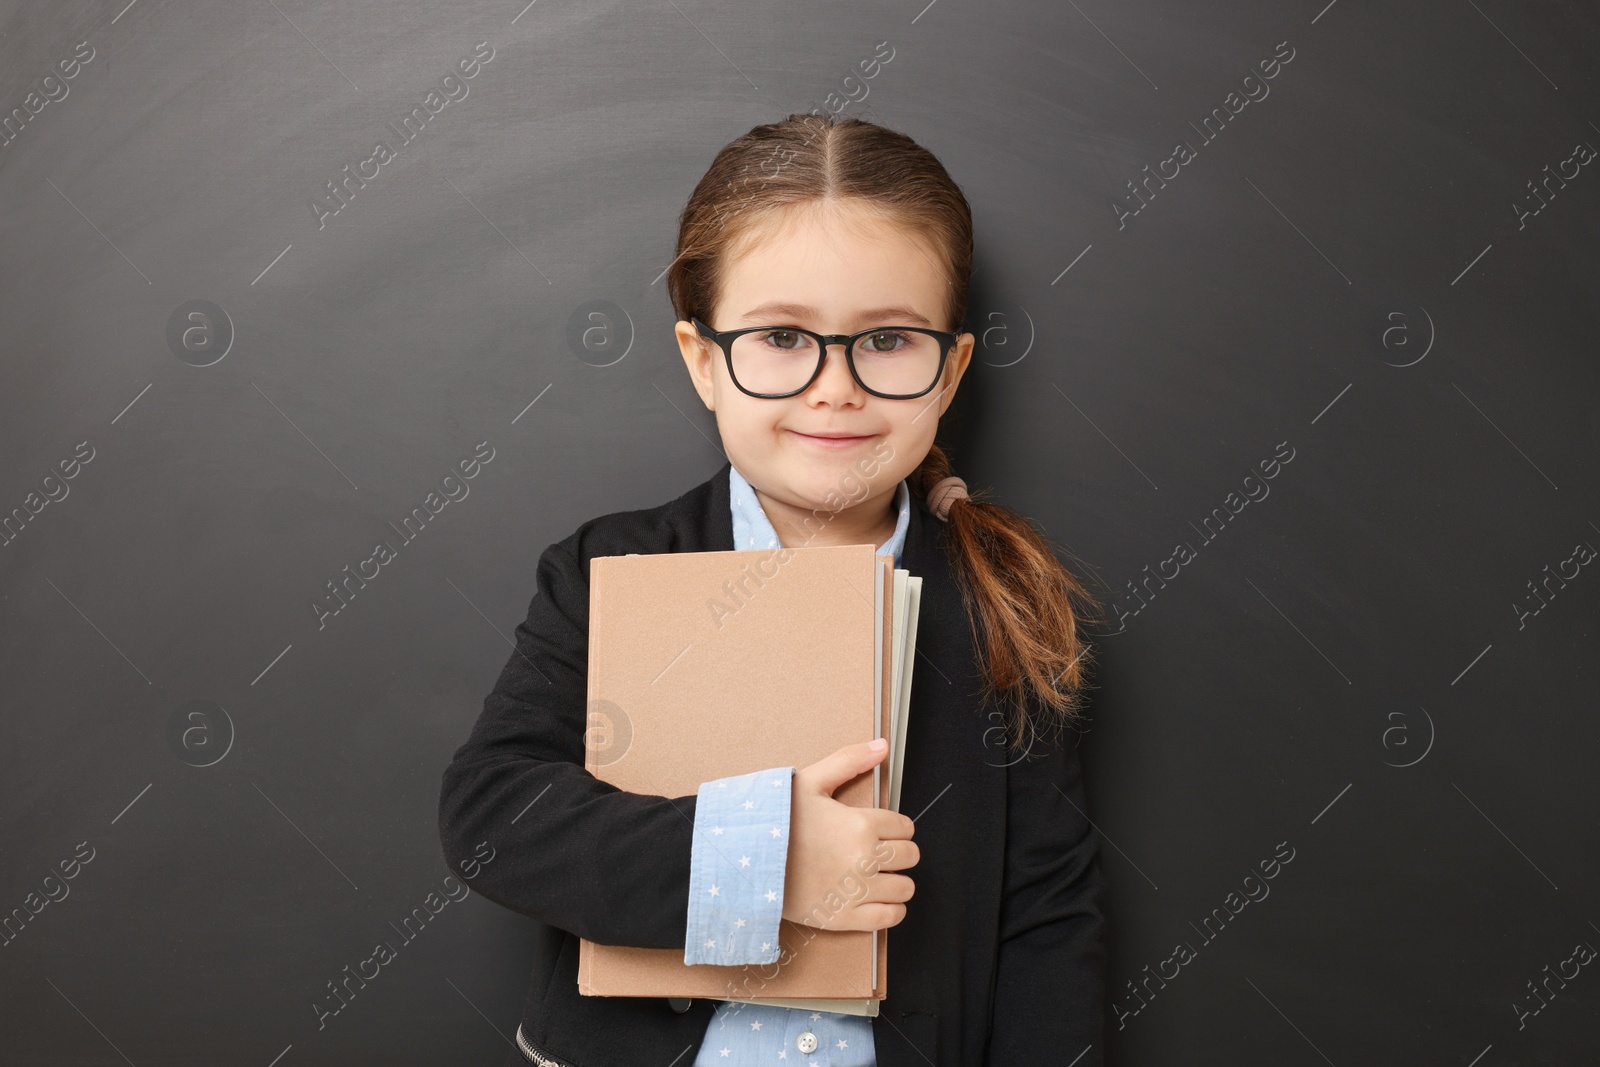 Photo of Happy little school child with books near chalkboard